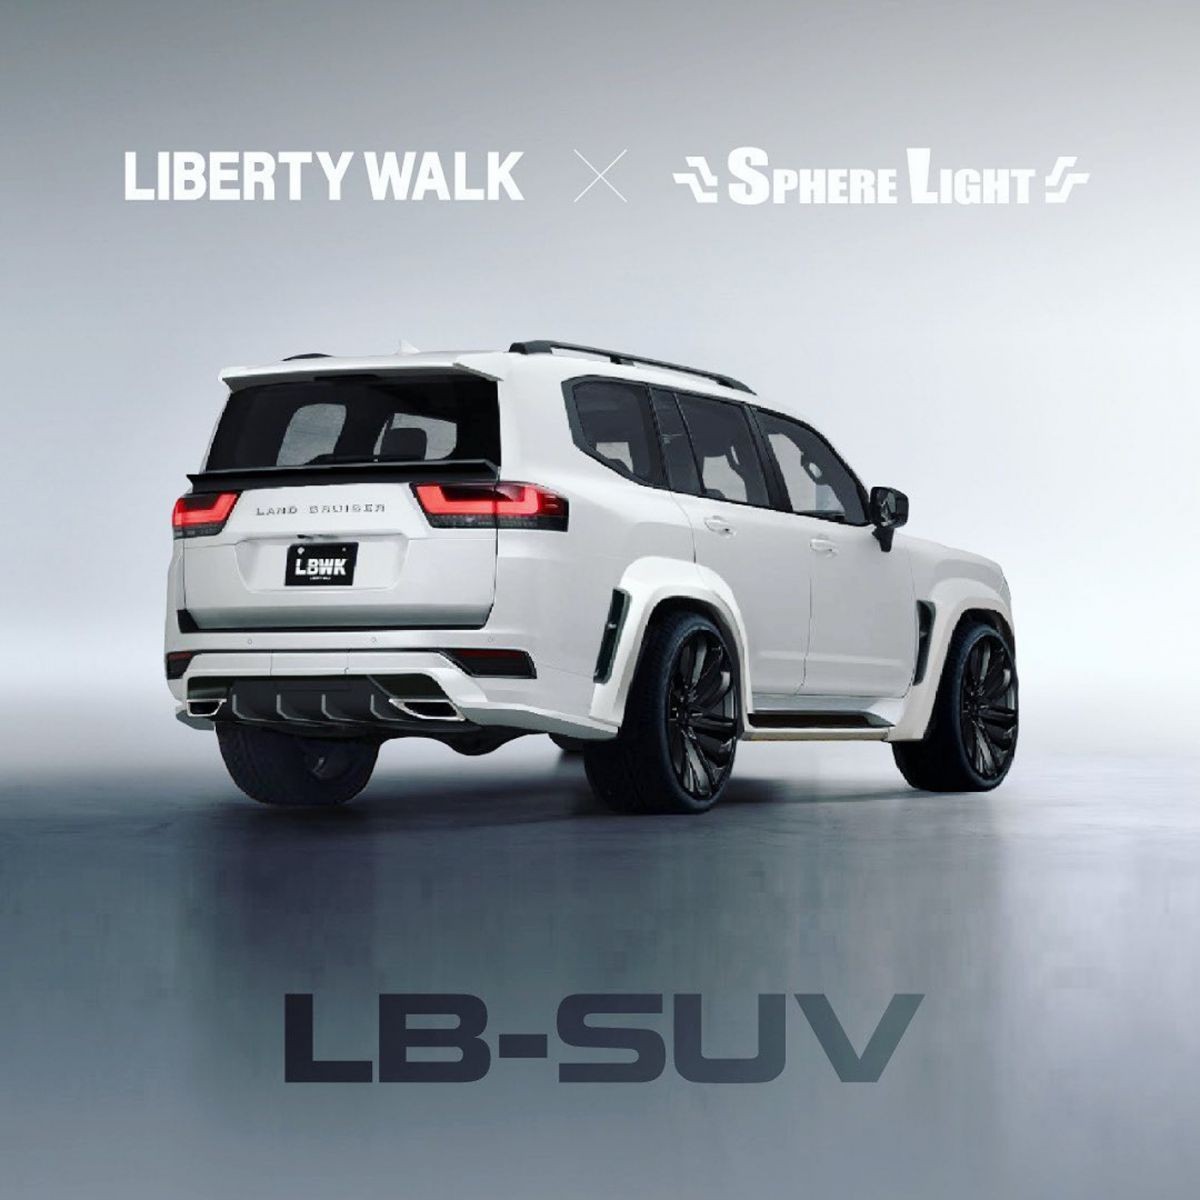 Liberty Walk giới thiệu bodykit cho Toyota Land Cruiser thế hệ mới